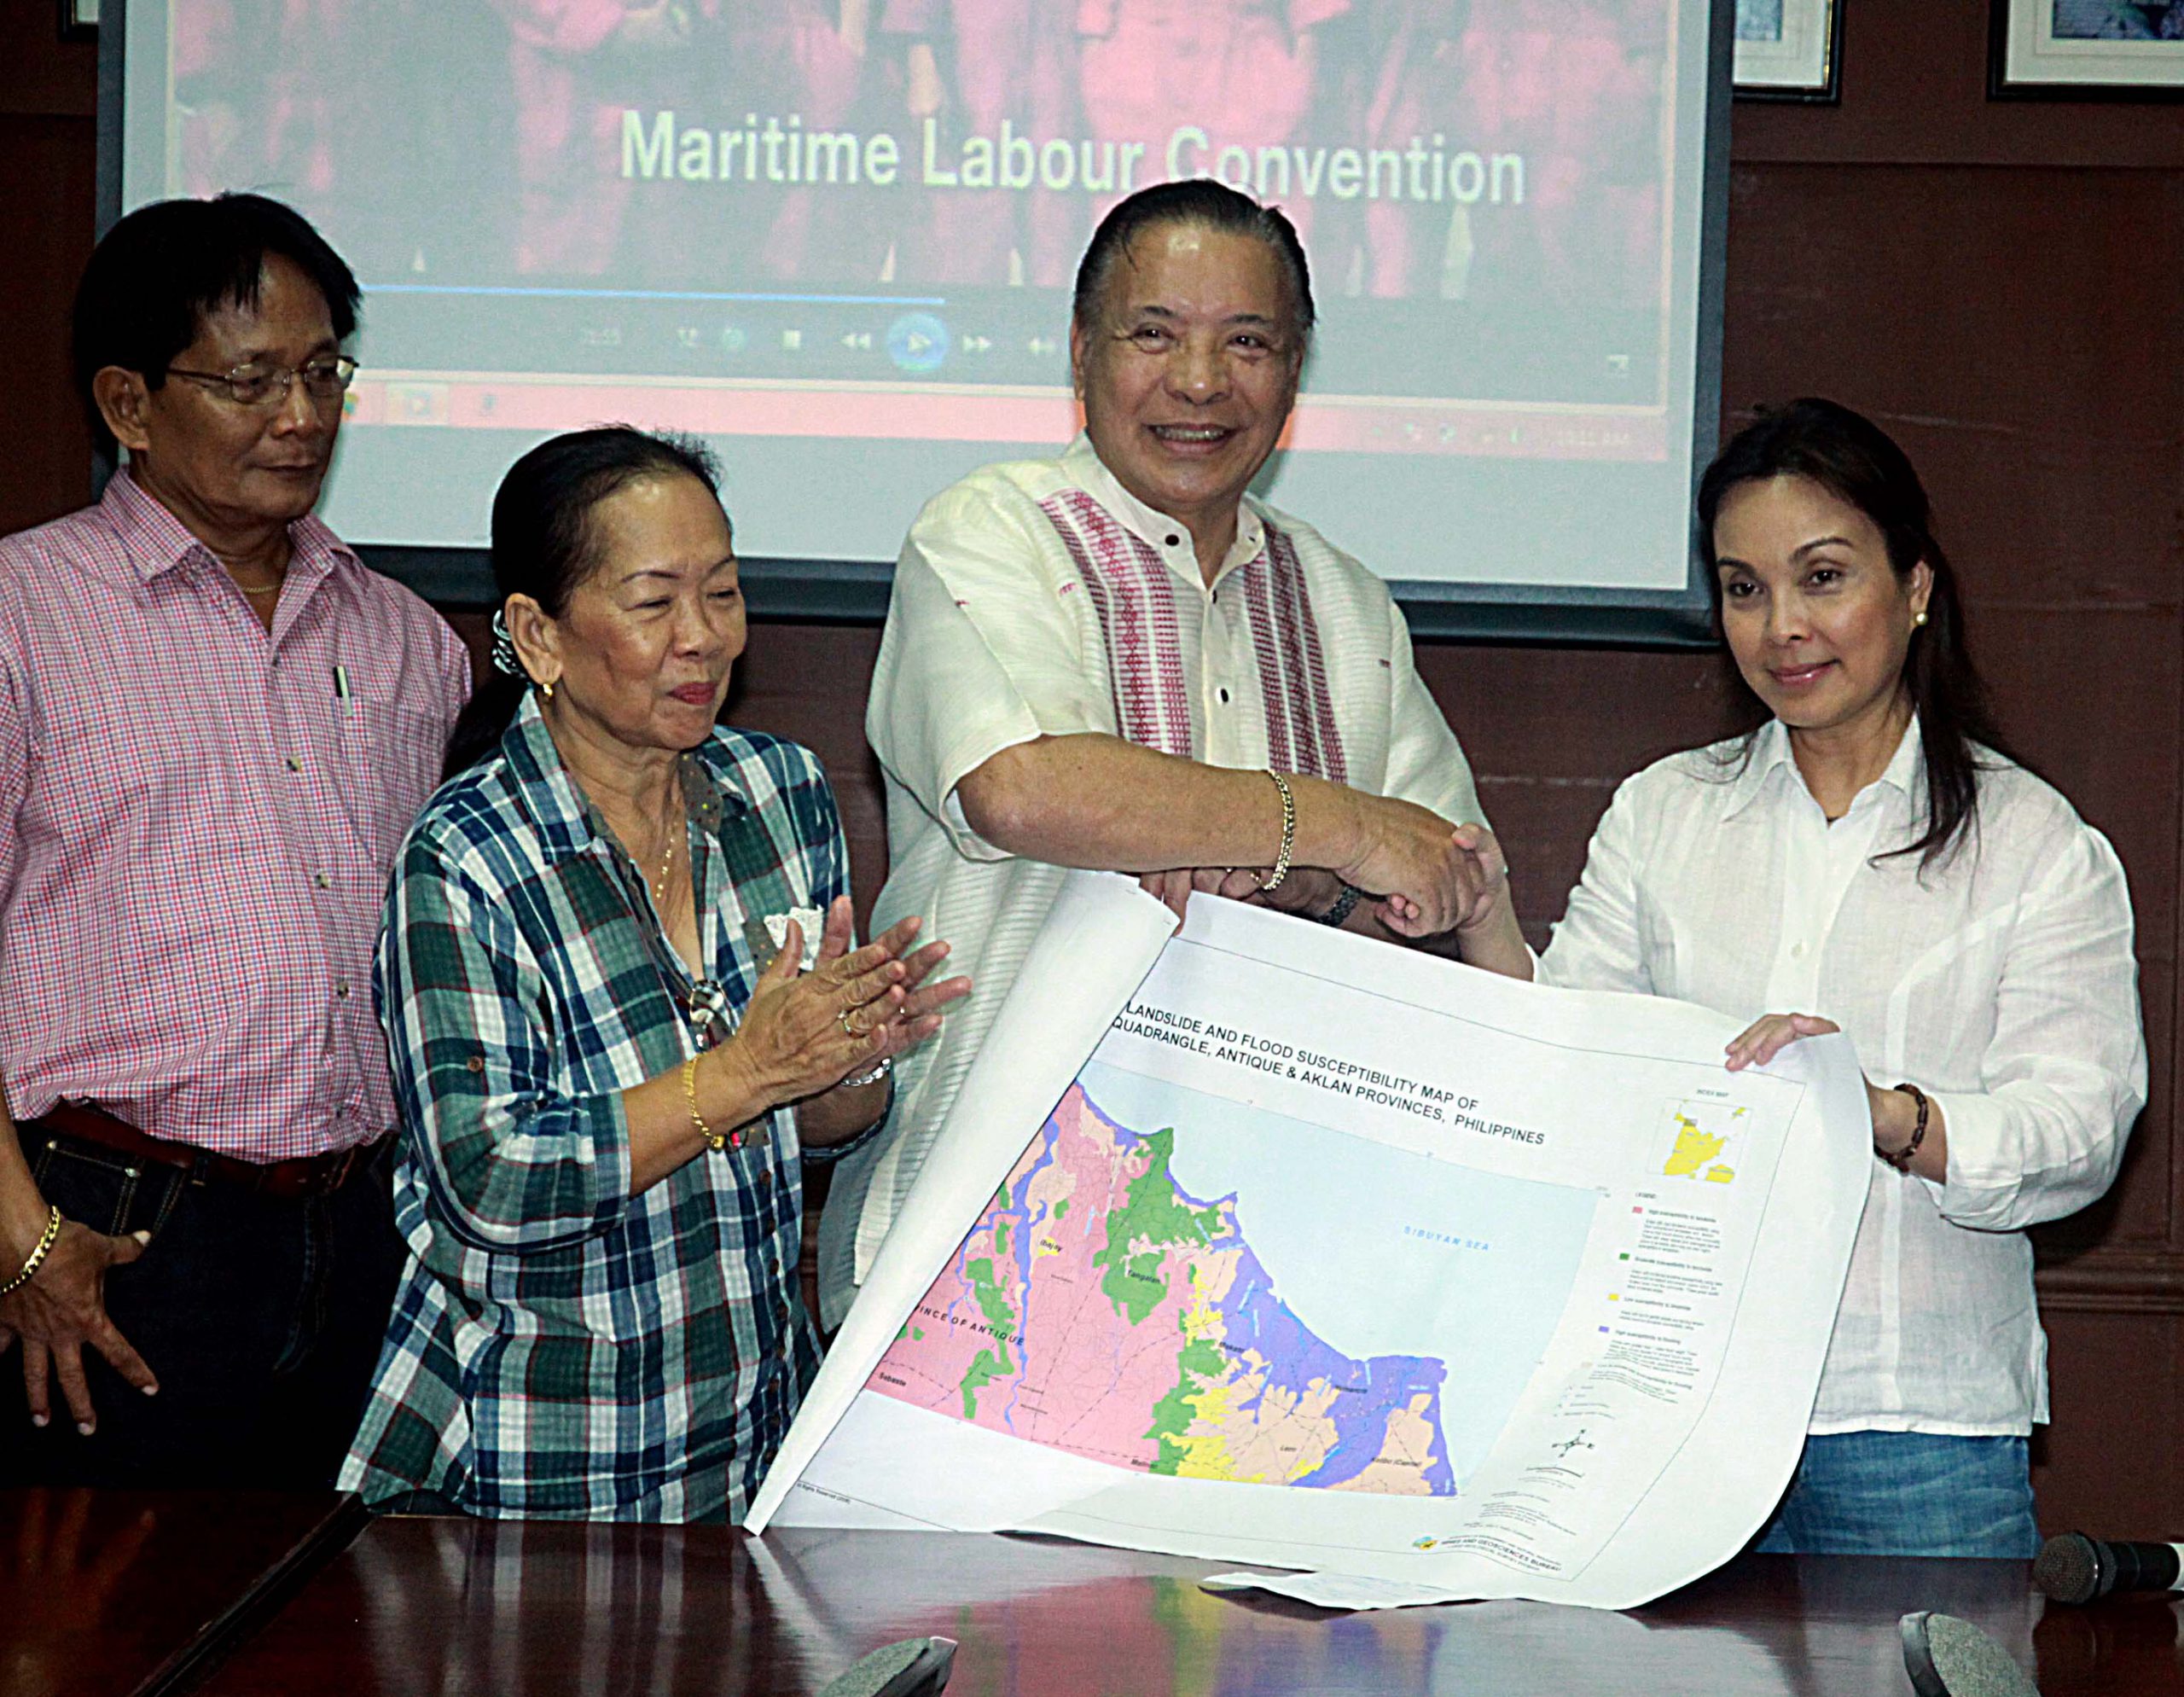 Loren Brings Green Campaign to Panay Island